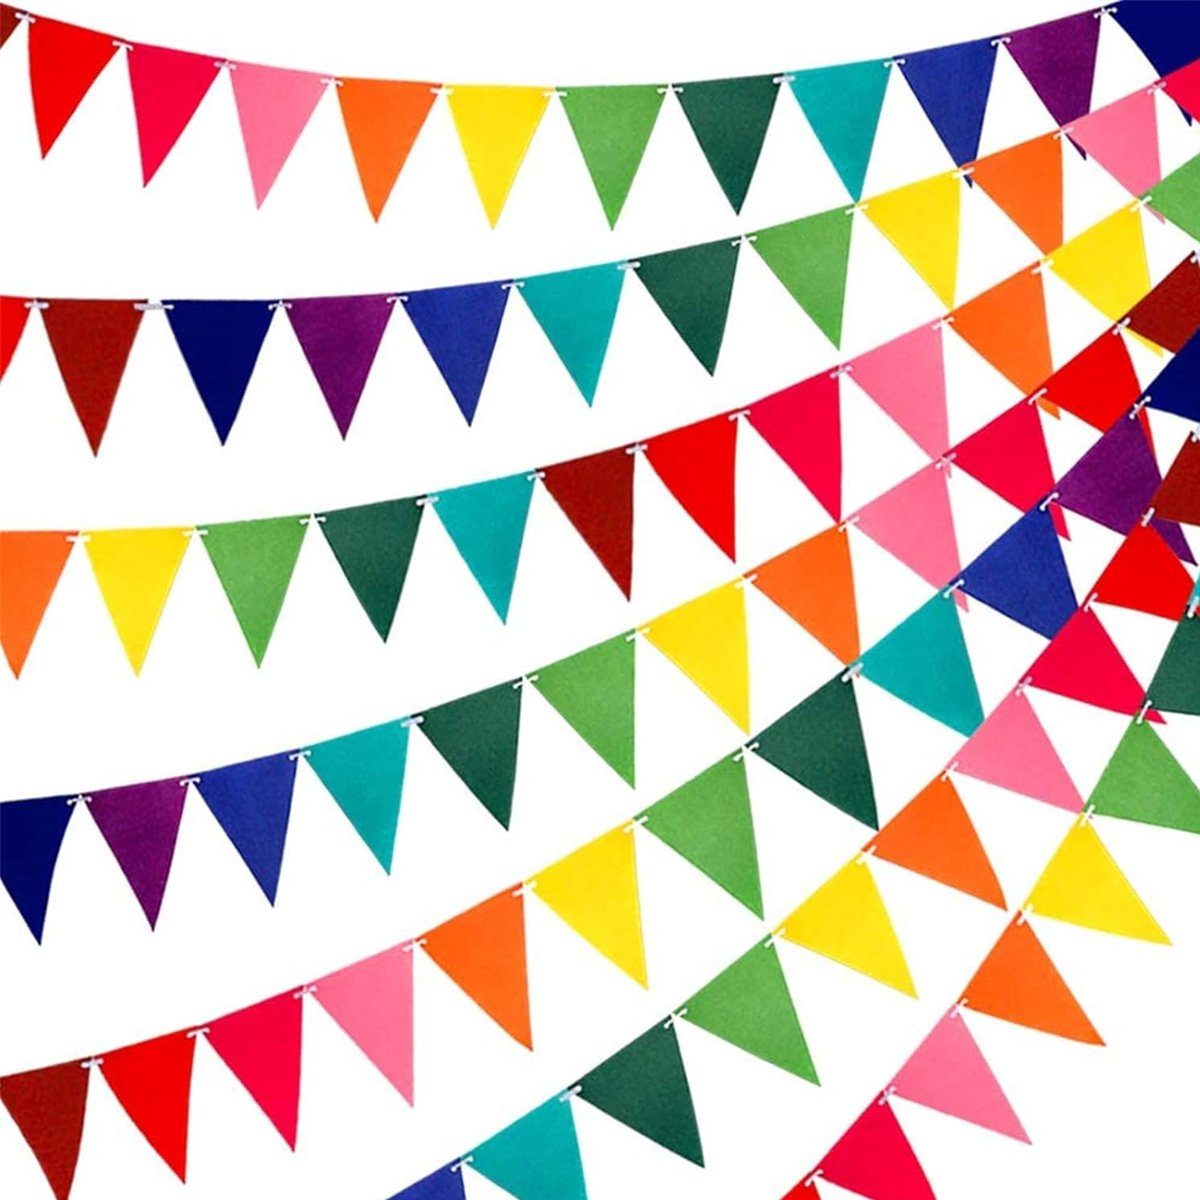 Jormftte Regenbogen-Wimpelkette,Dreieckige-Flagge,Festivals,Party-Dekorationen Wimpelkette